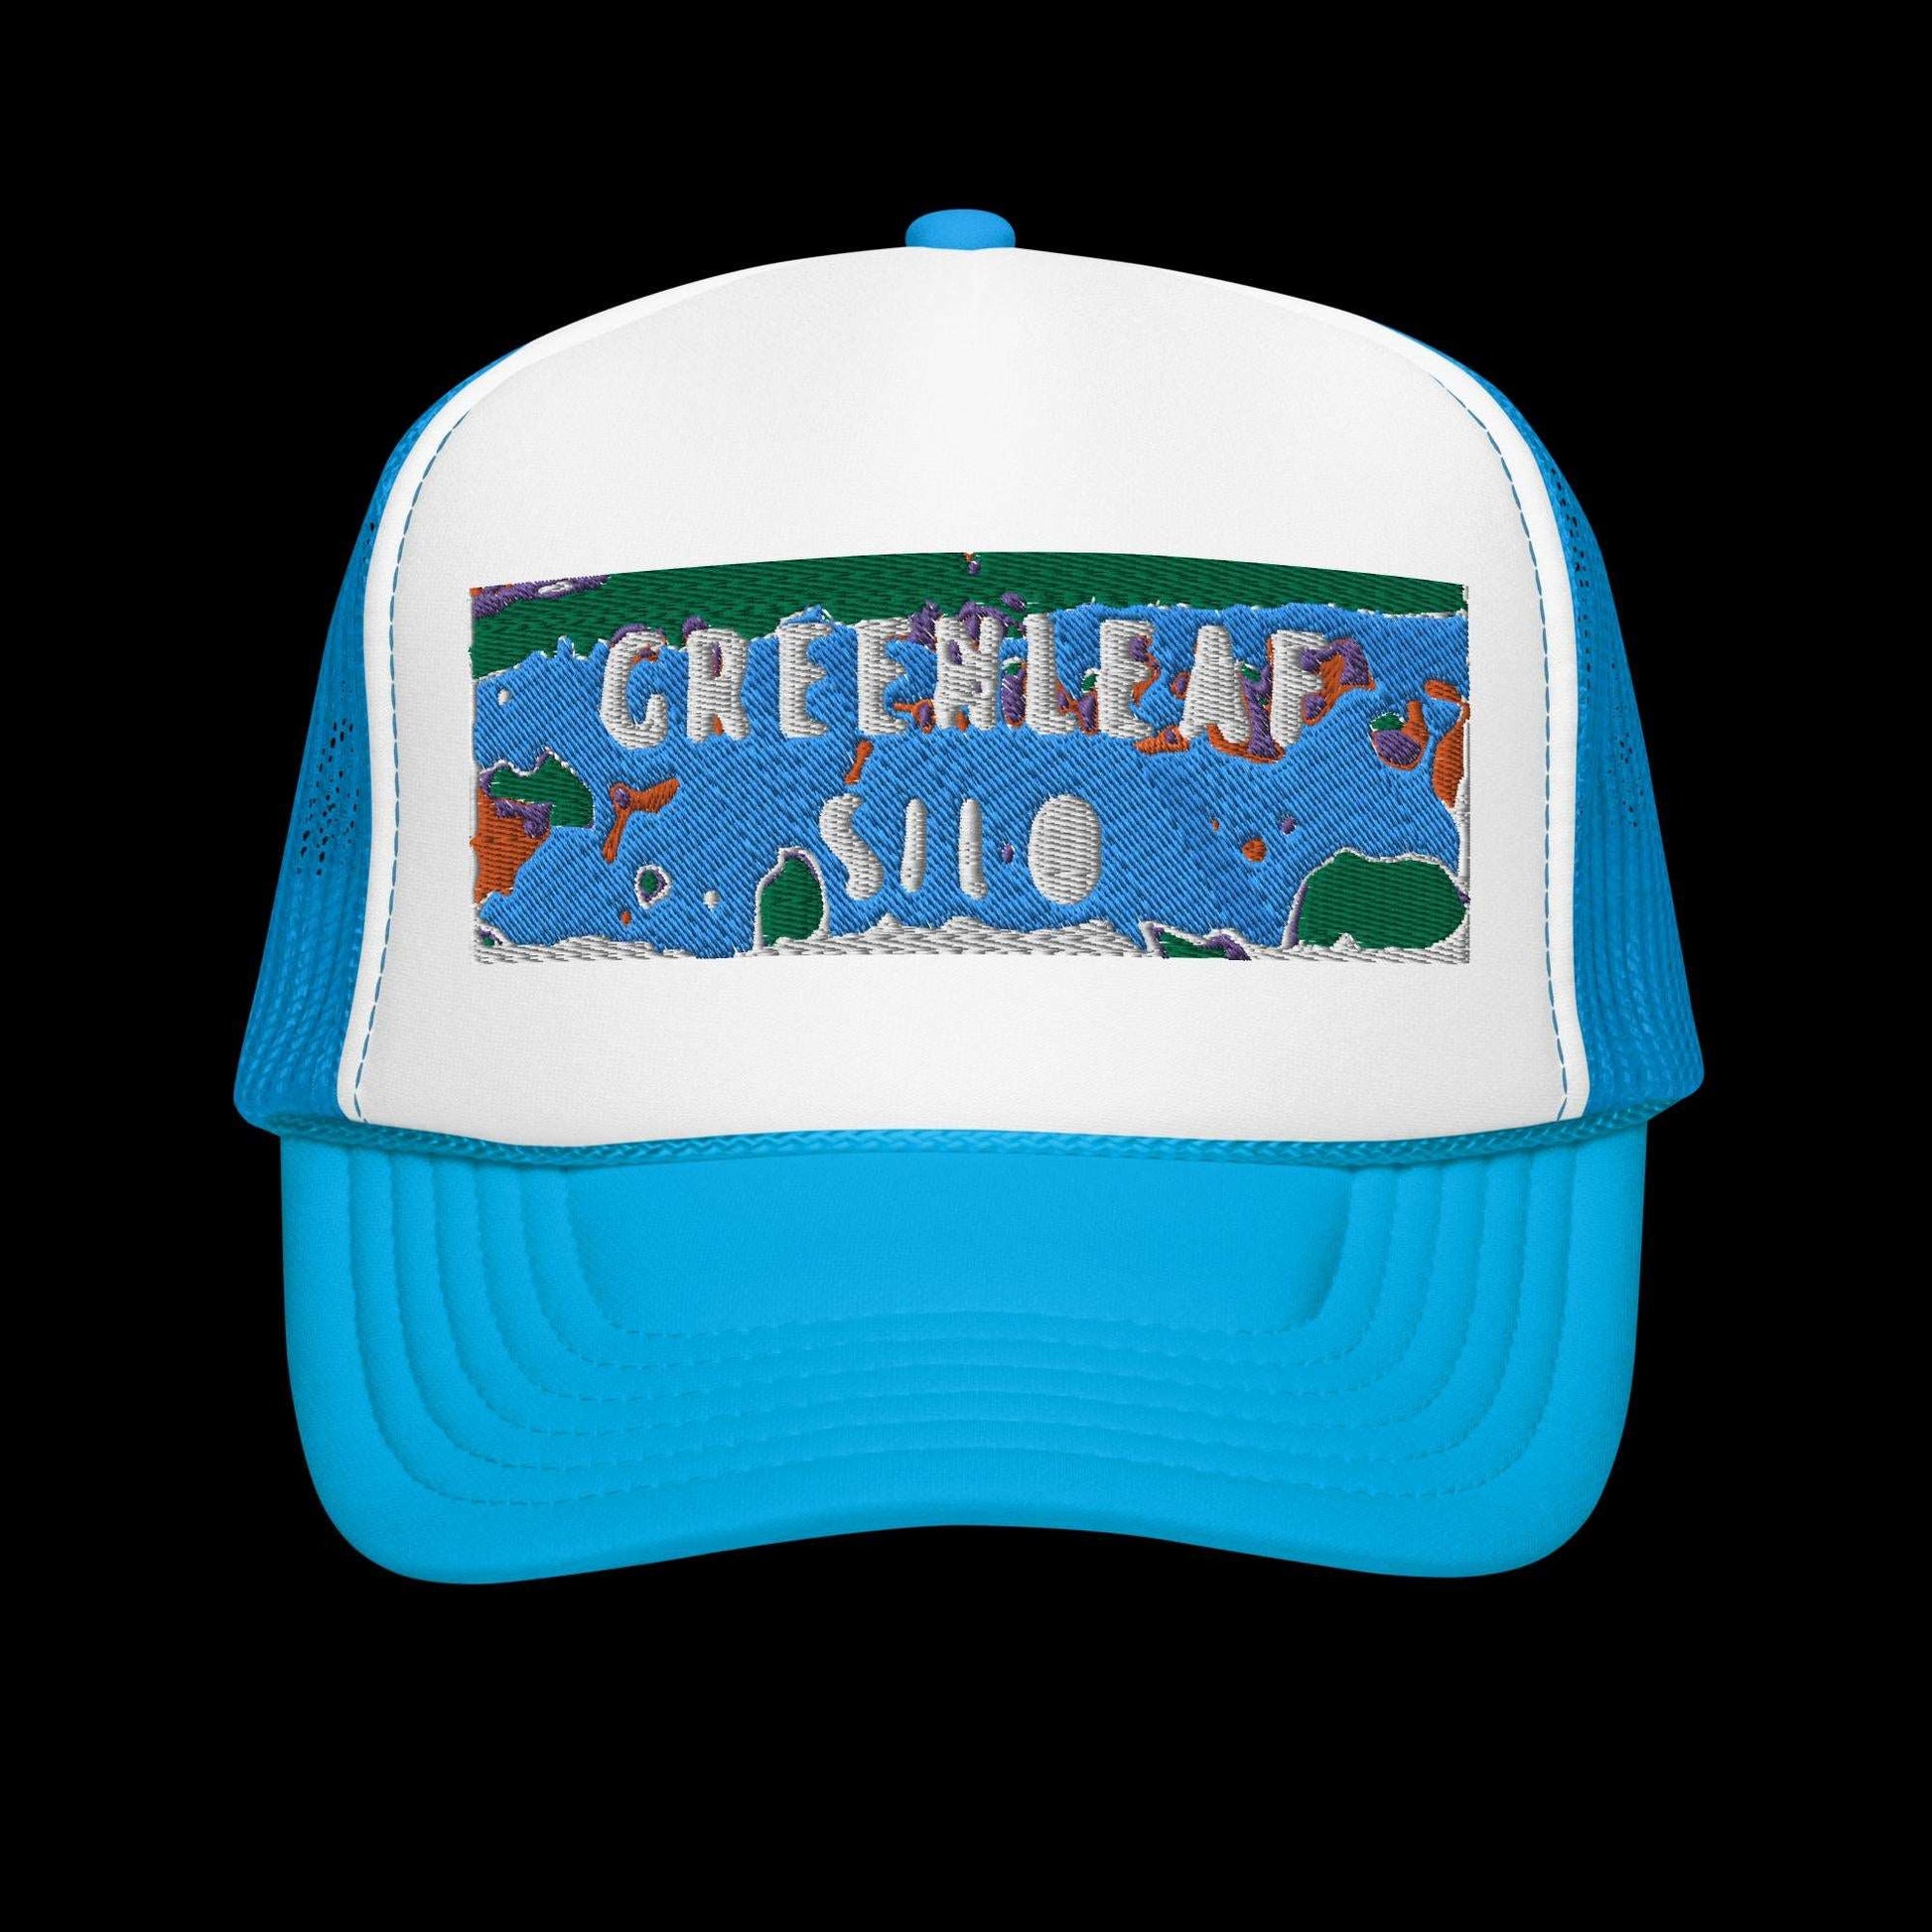 GreenLeaf Silo Foam trucker hat / GLS Cap - Lizard Vigilante